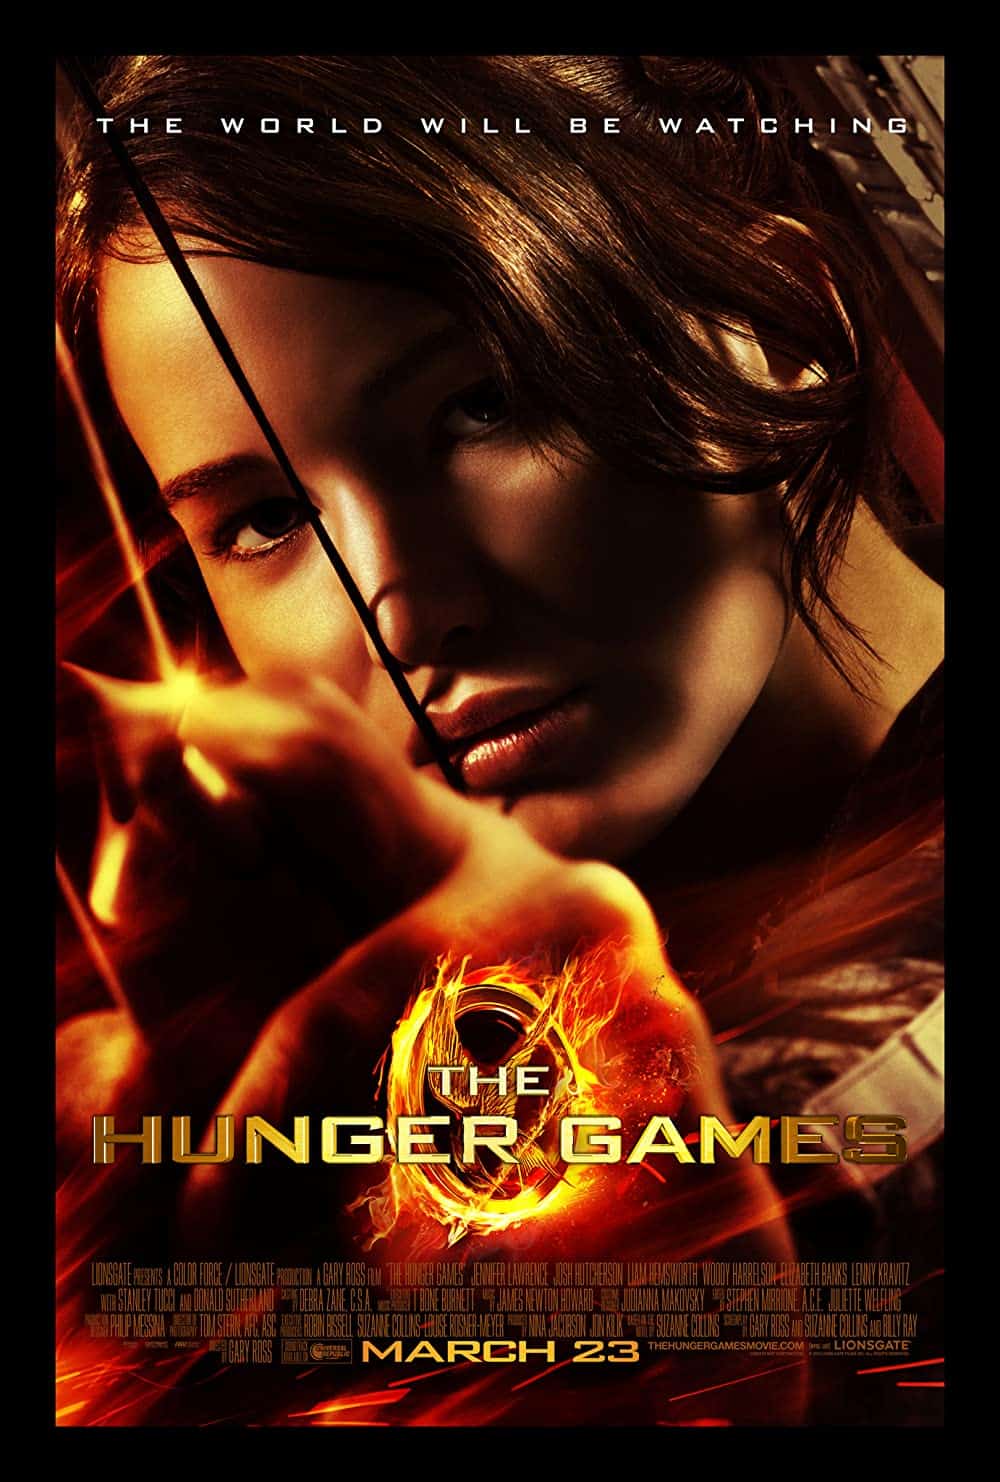 Harry Potter similar movie Hunger Games Film Series (2012-2015)